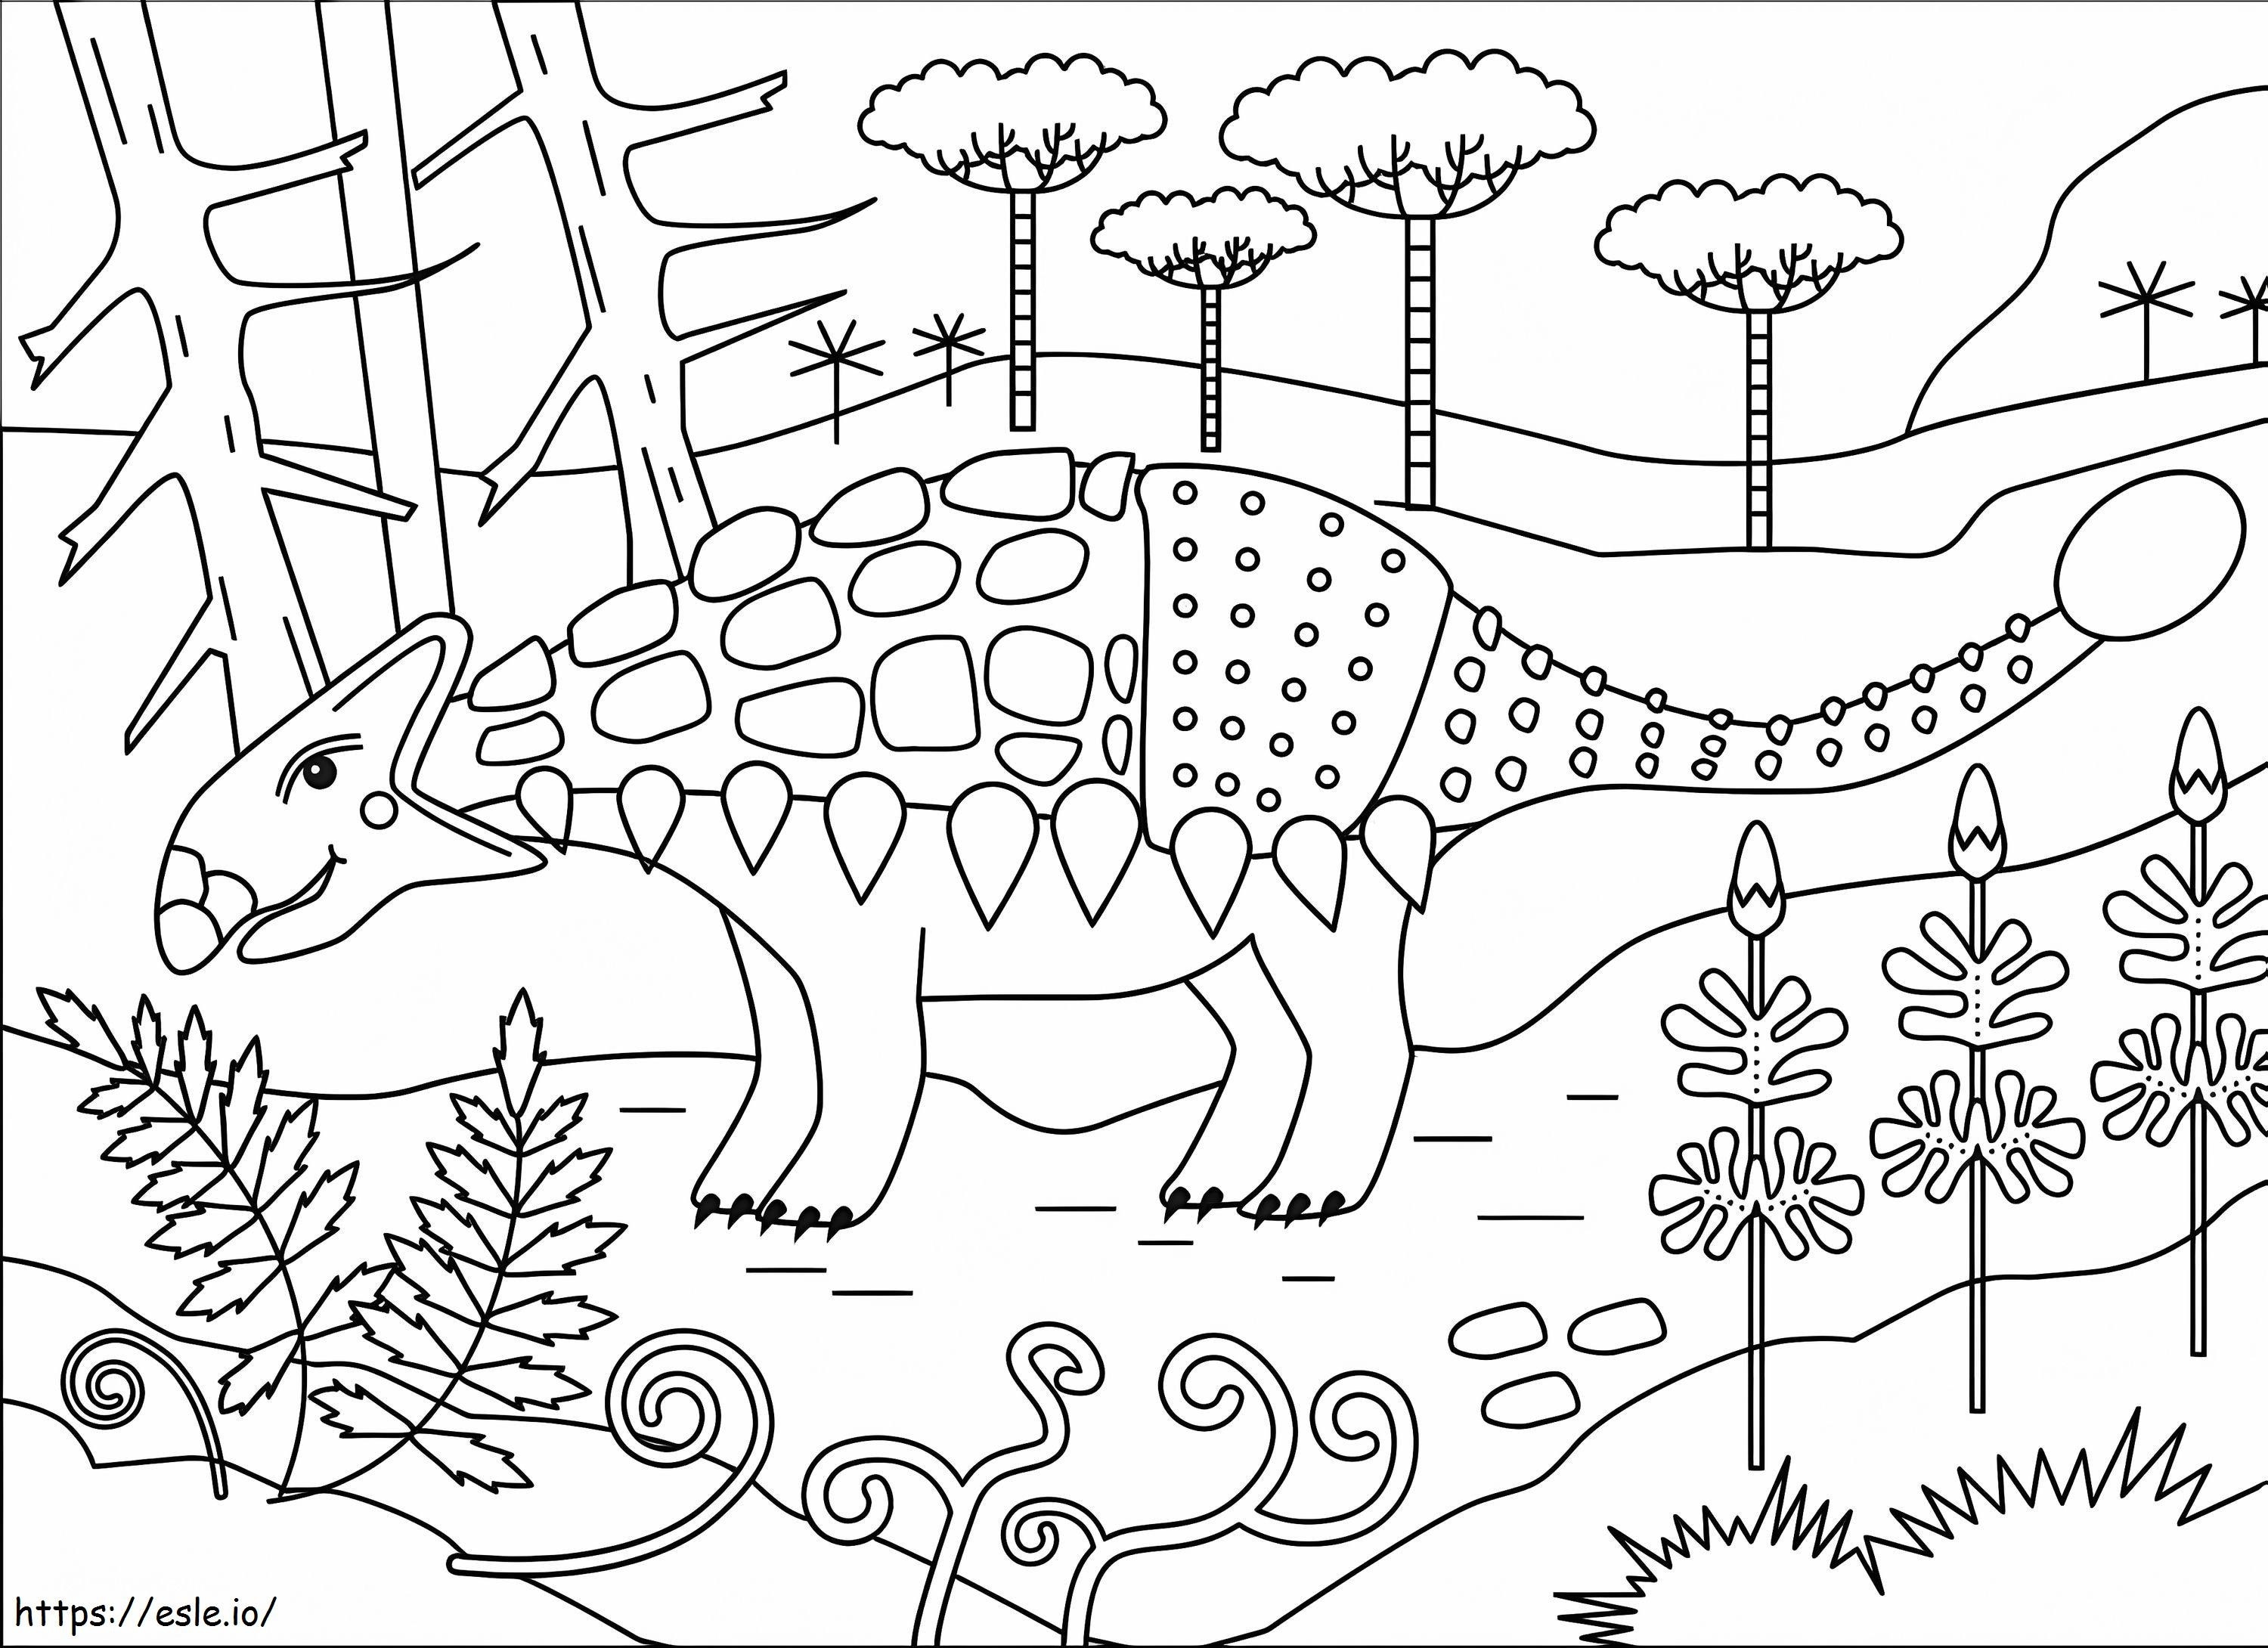 Einfacher Ankylosaurus ausmalbilder